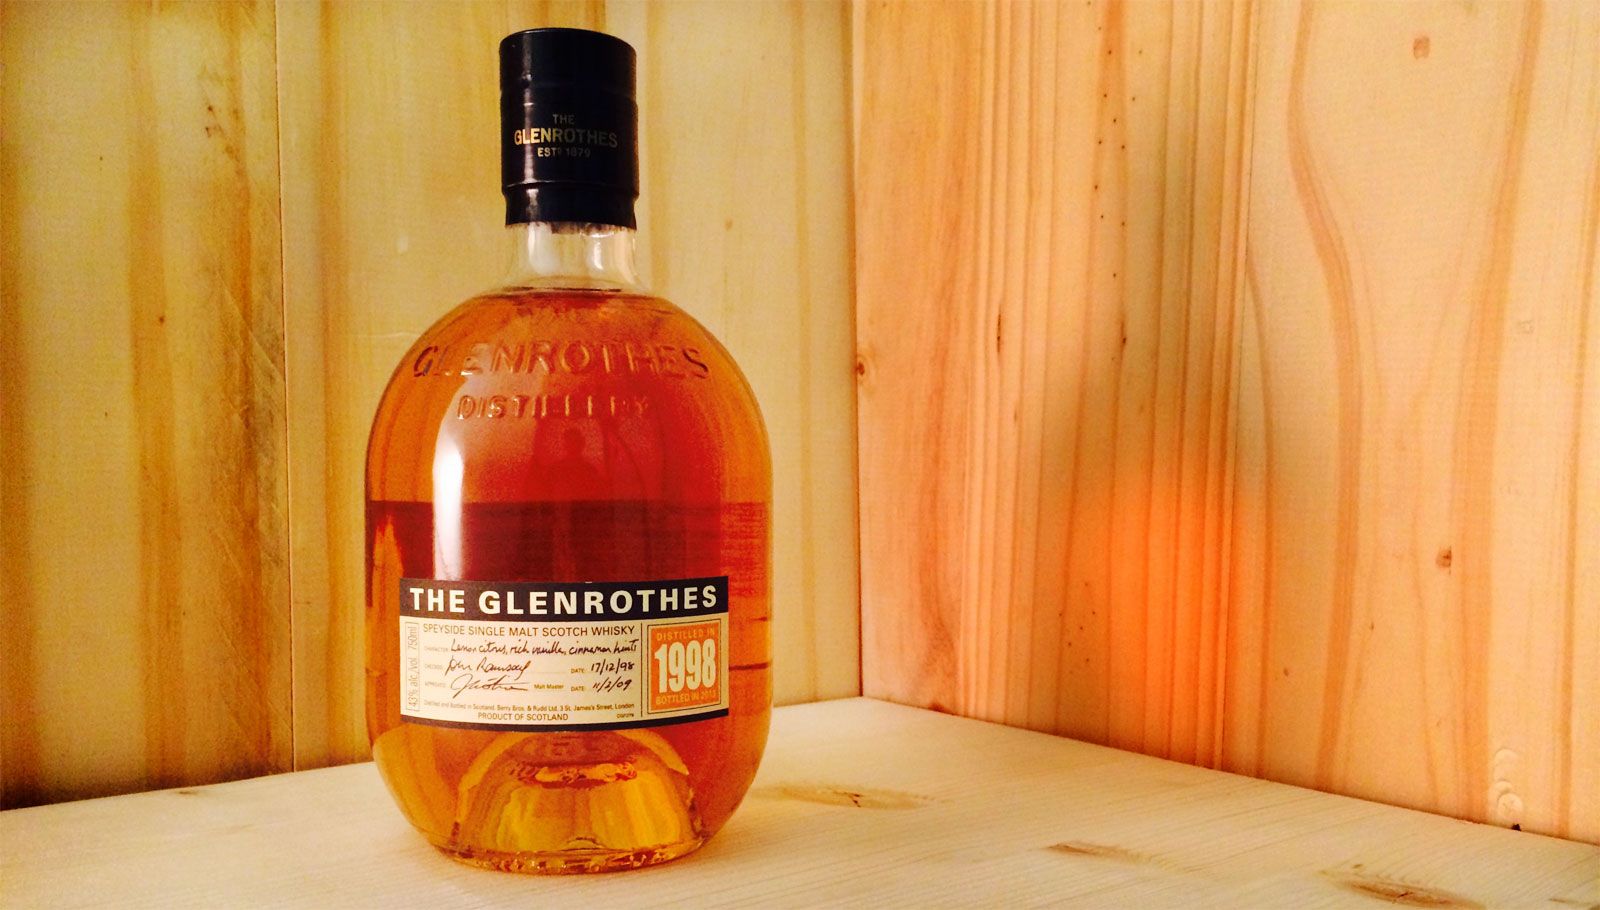 The Glenrothes 1998 Speyside Single Malt Scotch Whisky